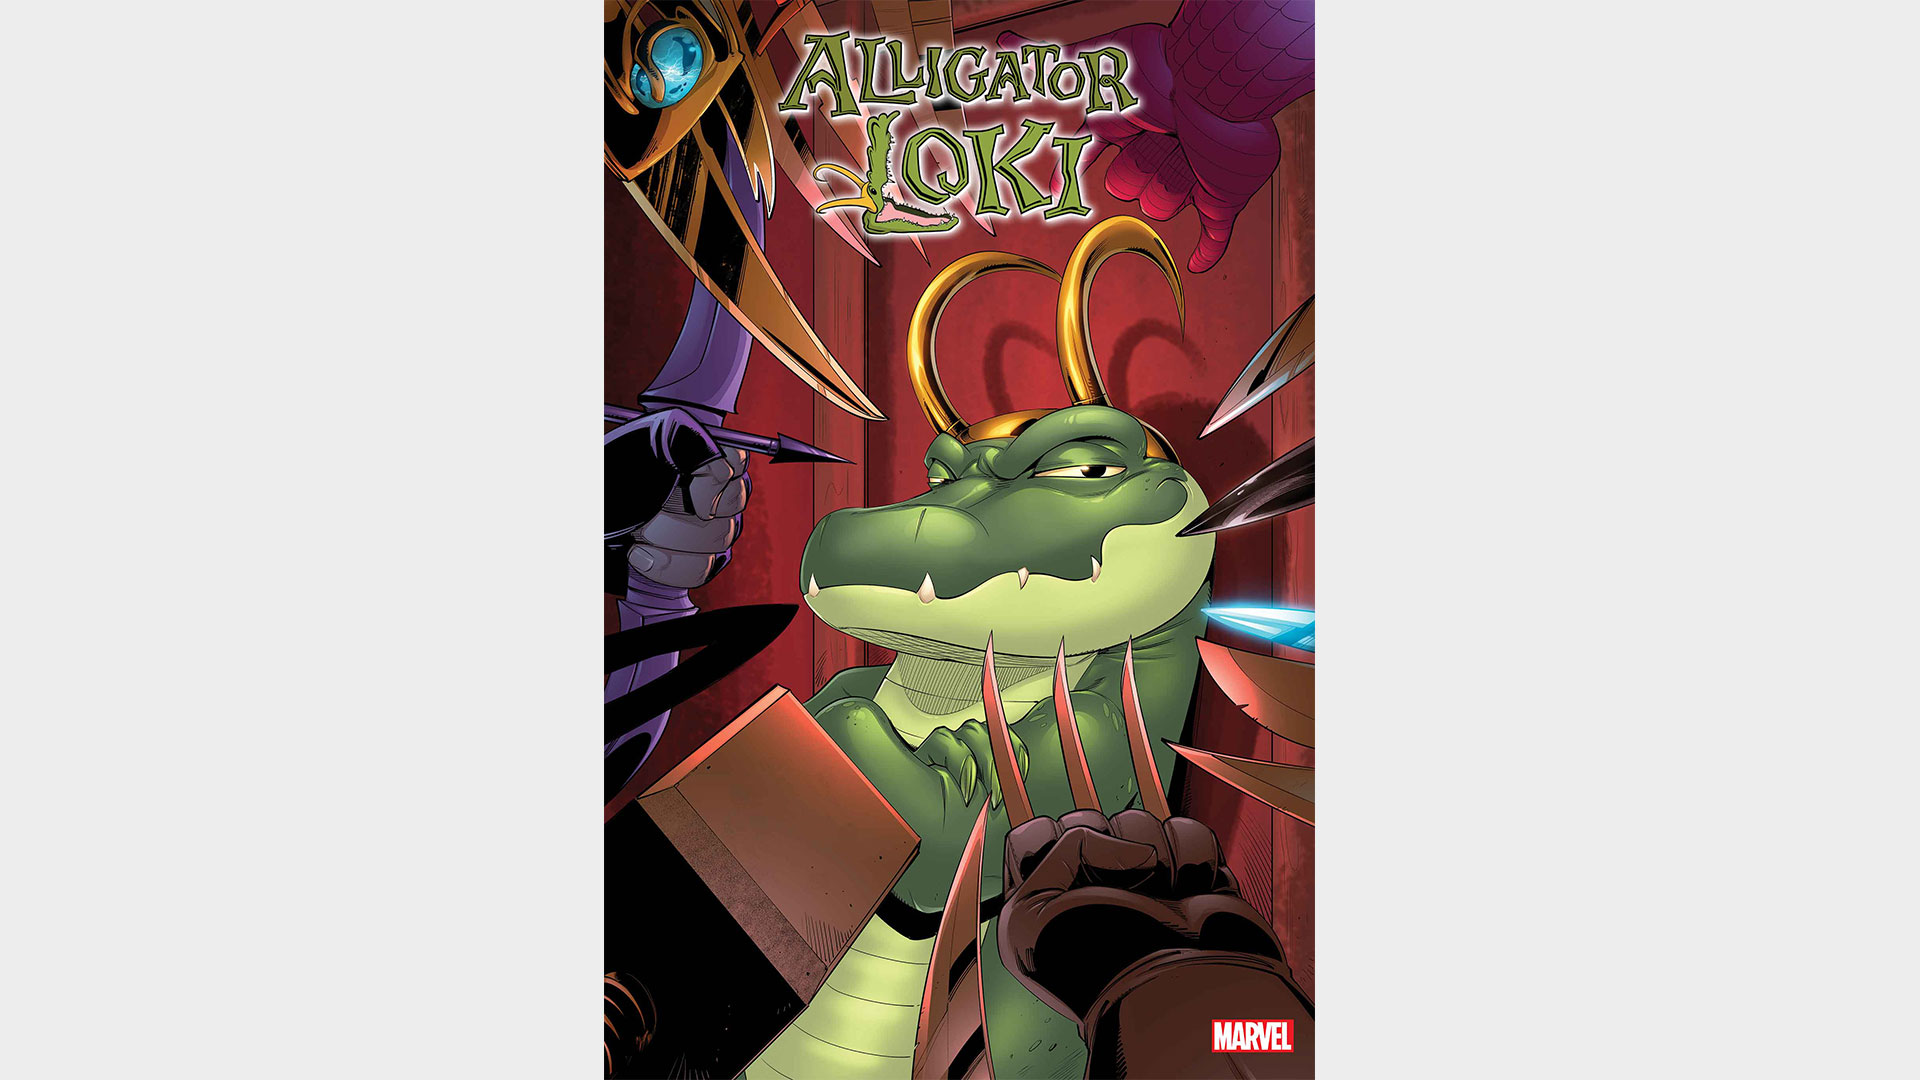 Couverture de l'Alligator Loki #1